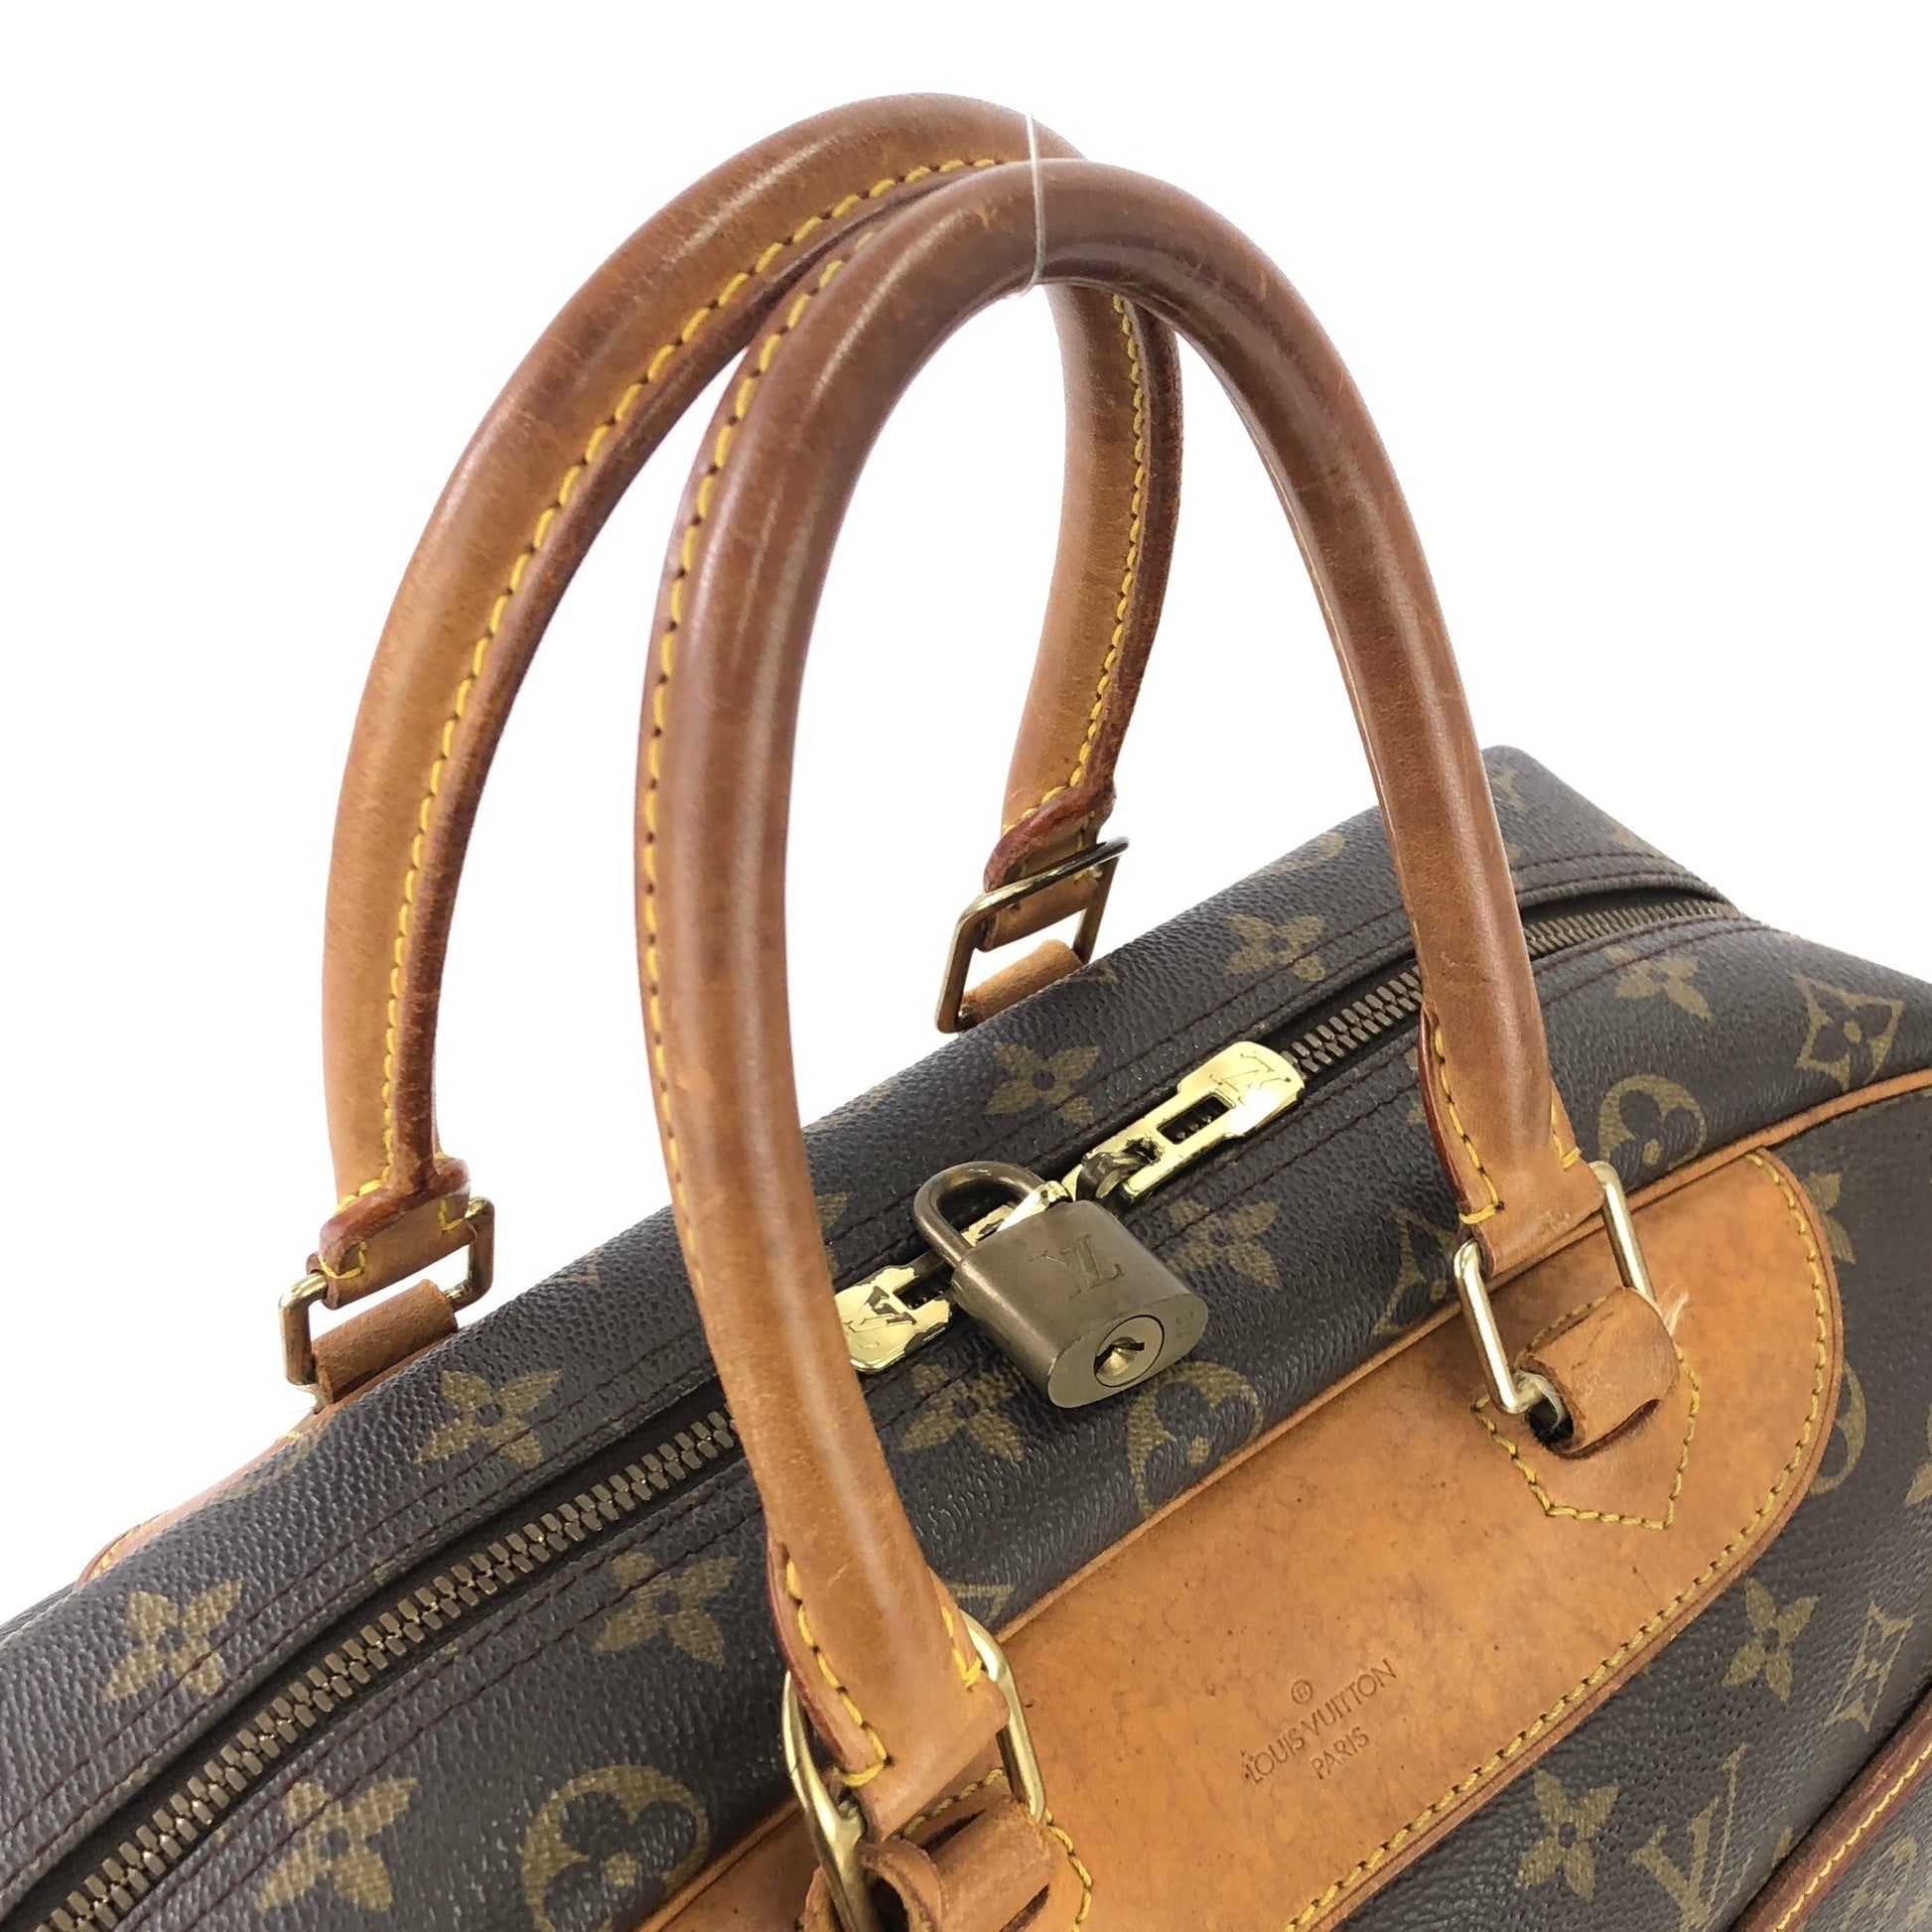 LOUIS VUITTON Monogram Deauville M47270 Bowling bag Handbag Brown